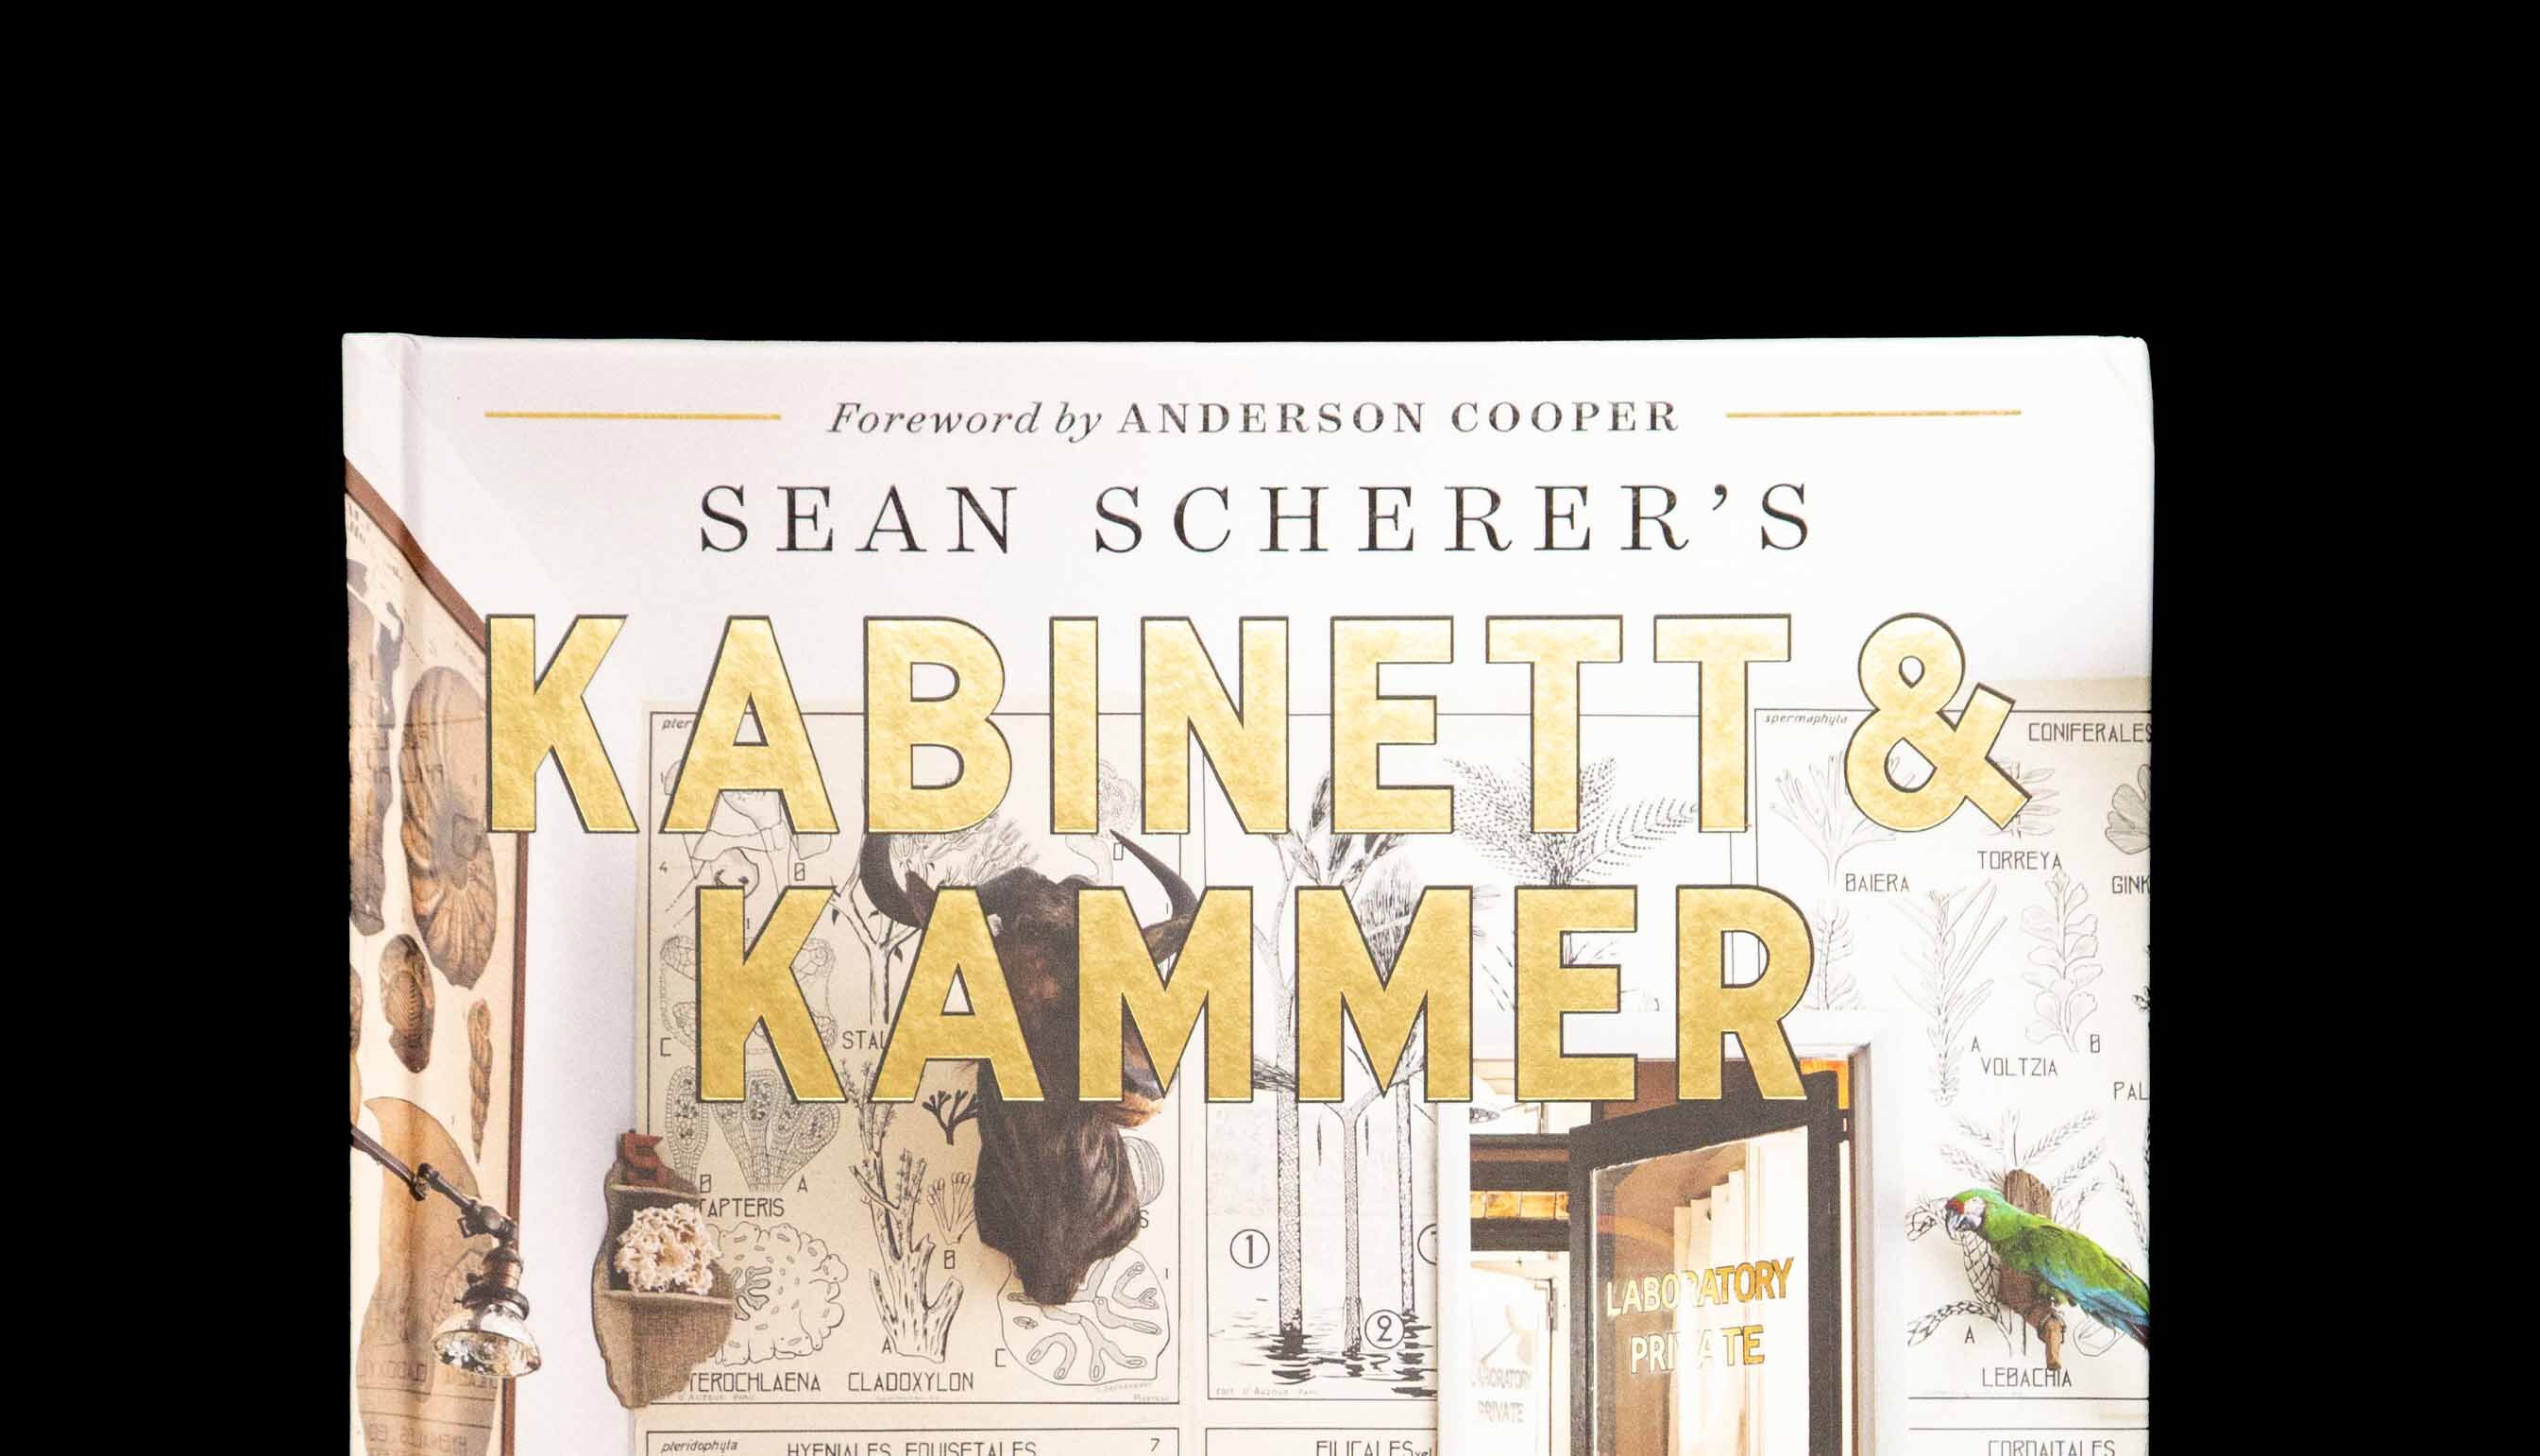 Sean Scherer’s Kabinett & Kammer